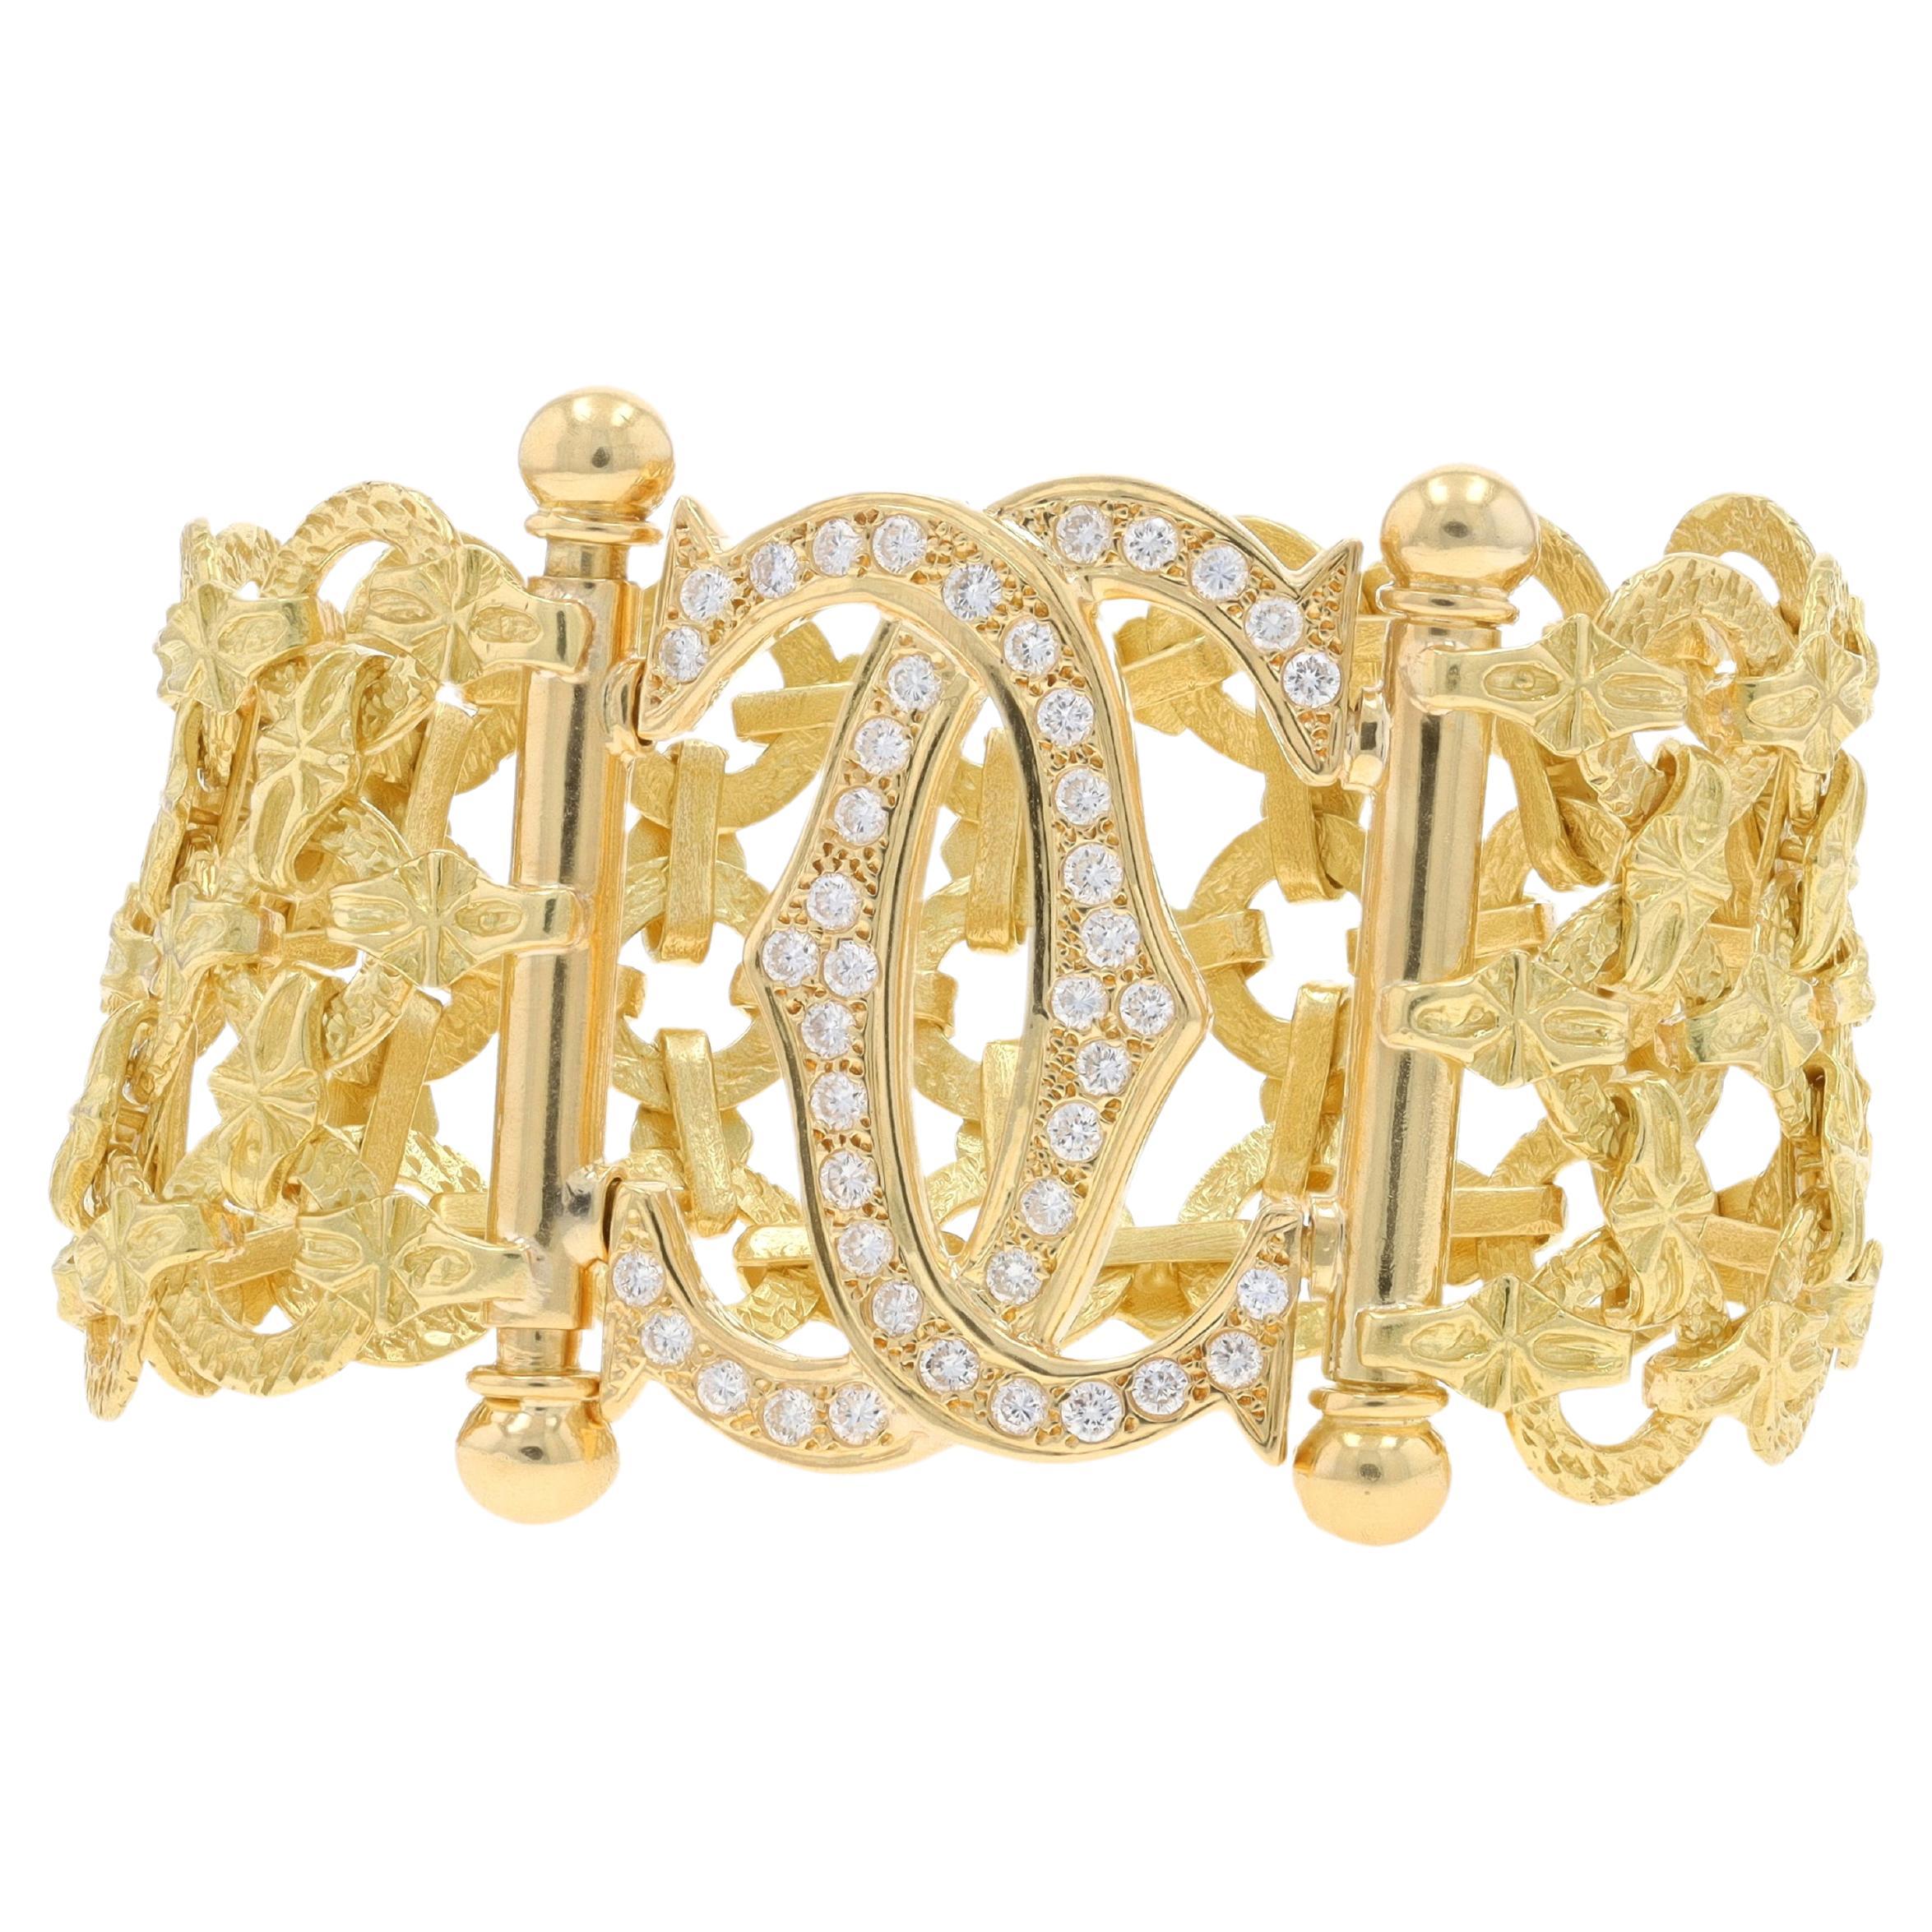 Yellow Gold Diamond Double C Bracelet 6 1/4" -18k Rnd 1.32ctw Chain Link Lattice For Sale